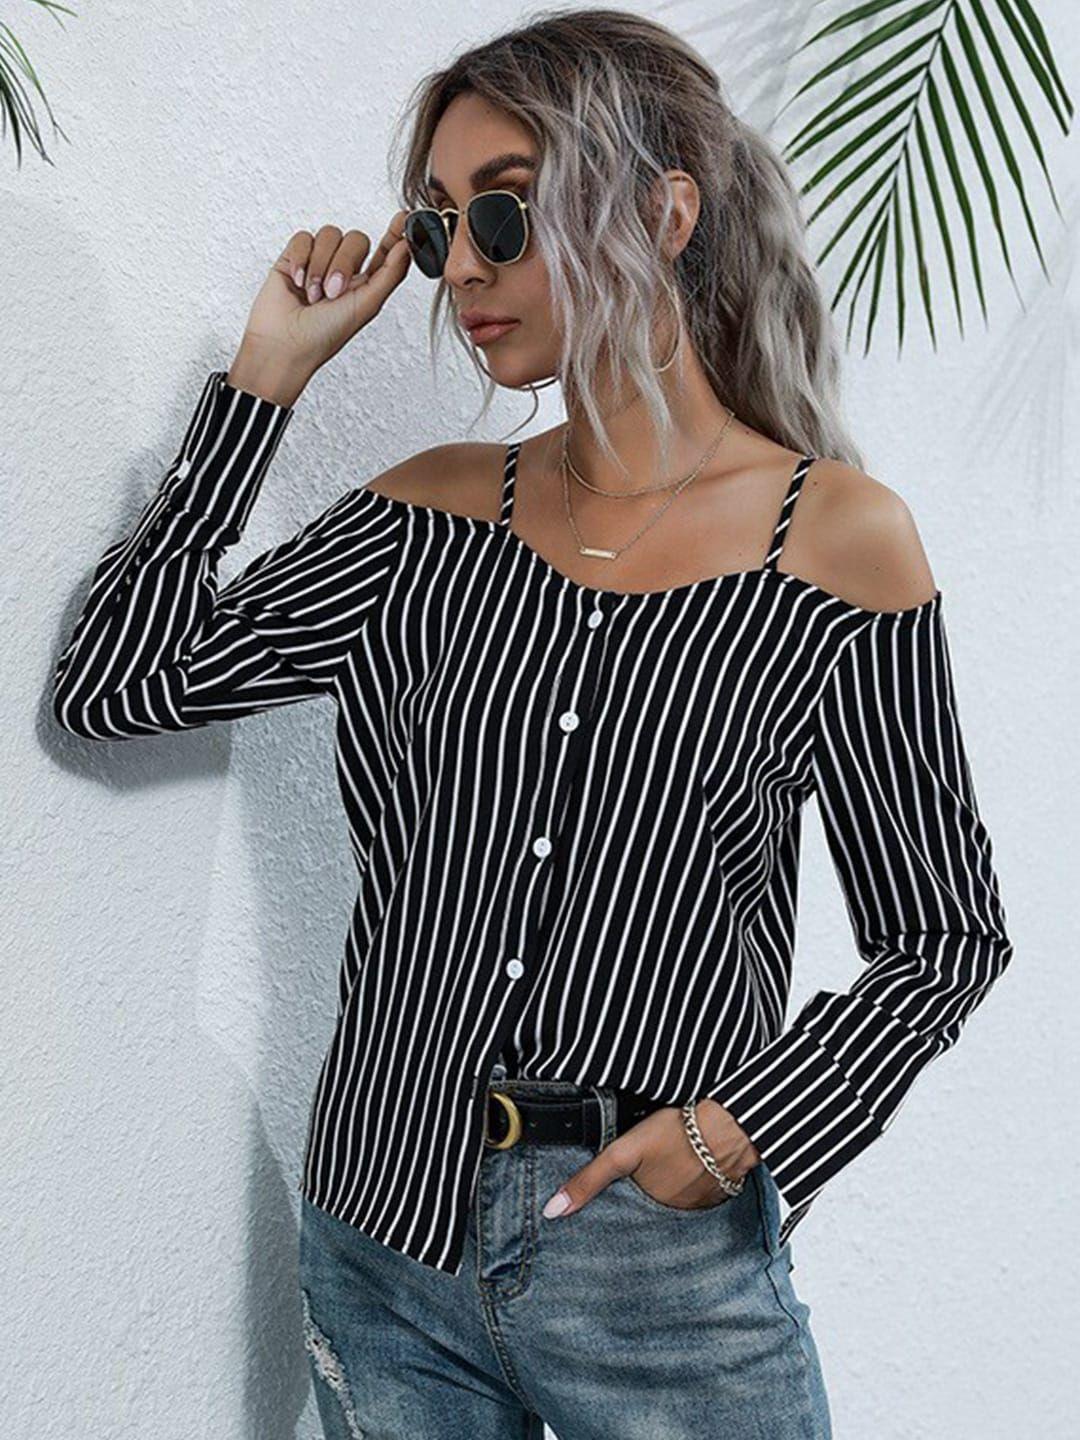 stylecast black & white striped monochrome shirt style top